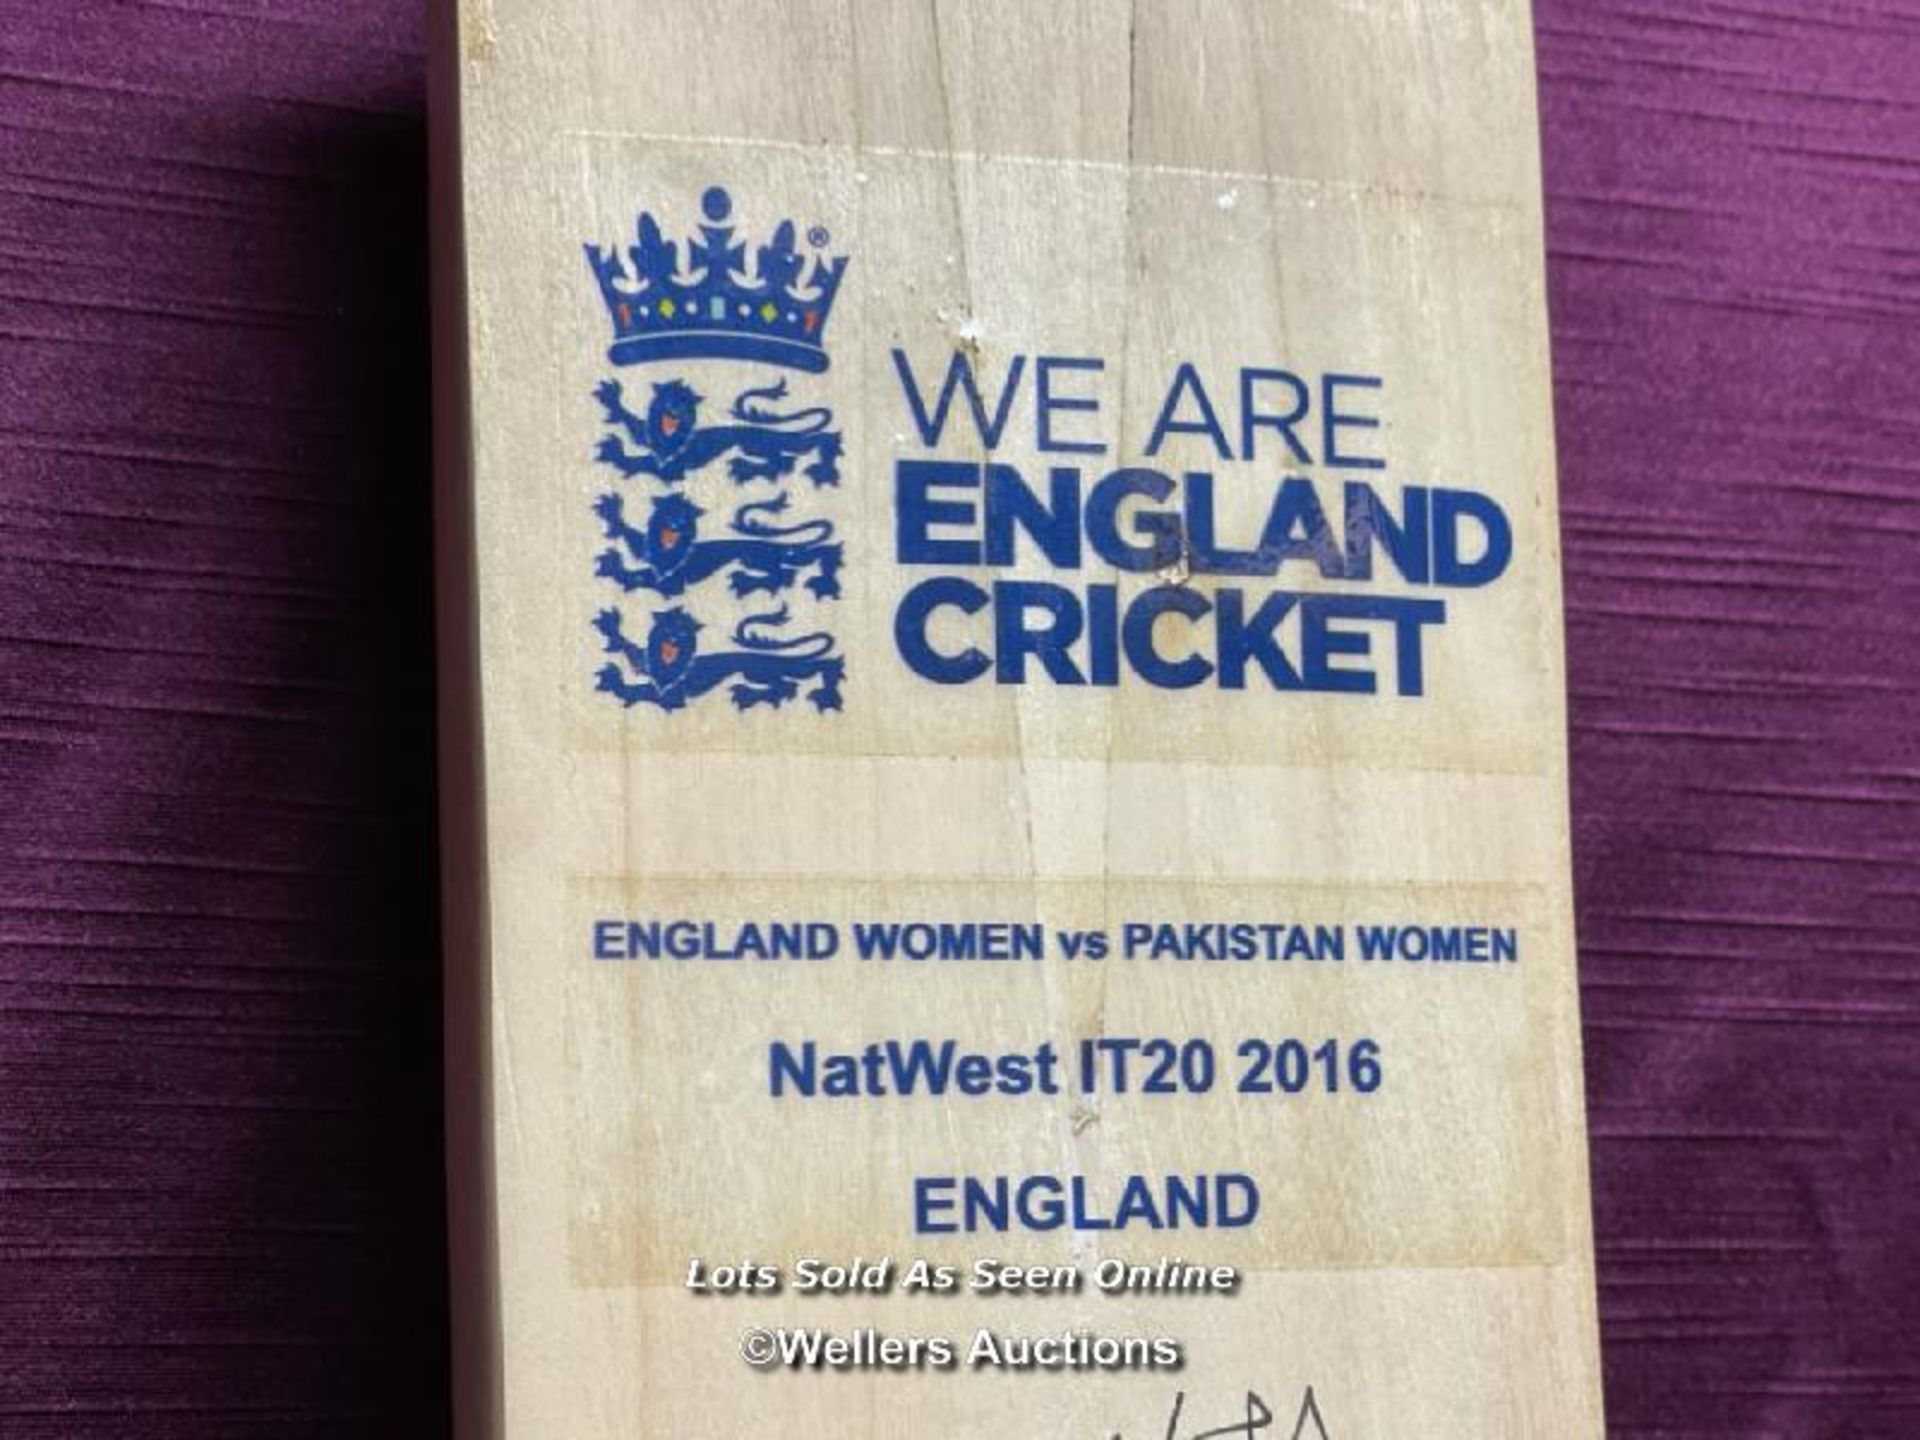 ENGLAND WOMEN SIGNED CRICKET BAT, ENGLAND WOMEN VS PAKISTAN WOMEN, NATWEST IT20 2016 - Image 3 of 4